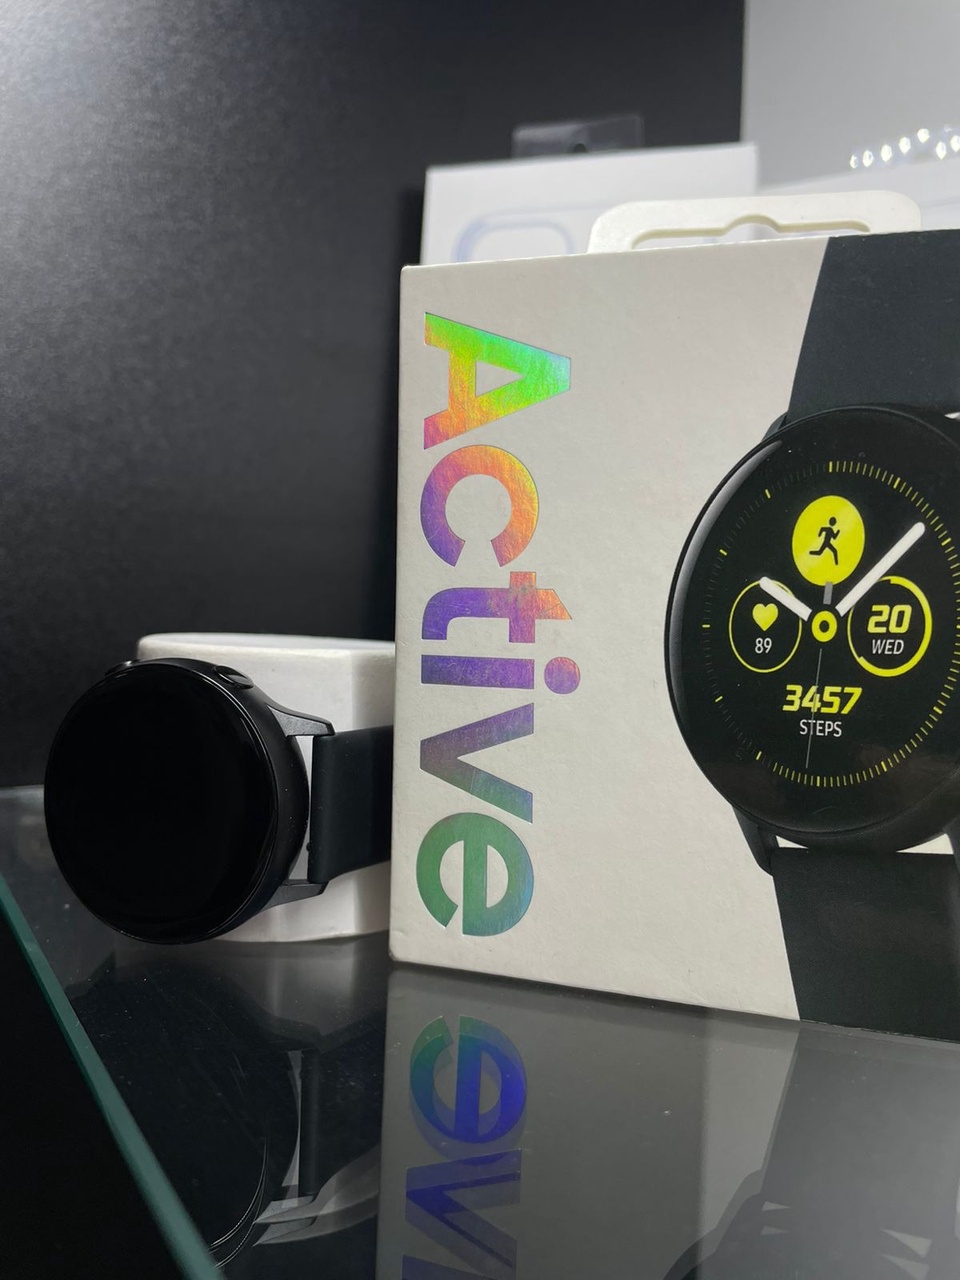 Samsung Galaxy Watch Active - 5 500 ₽, заказать онлайн.